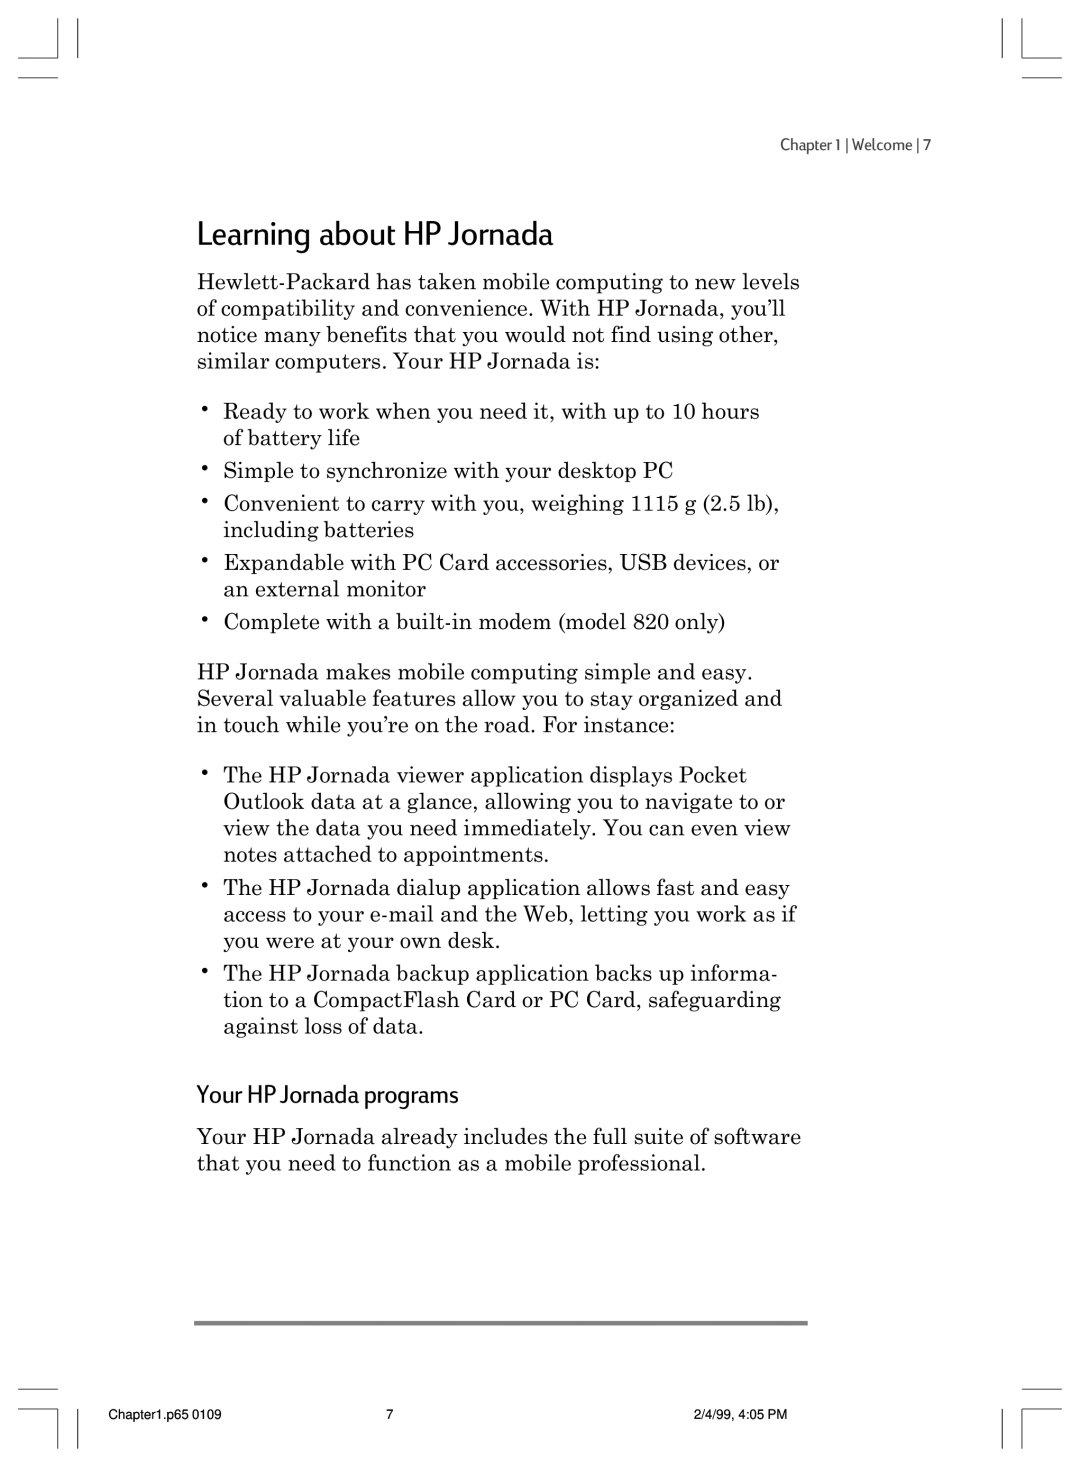 HP 820 E manual Learning about HP Jornada, Your HP Jornada programs 